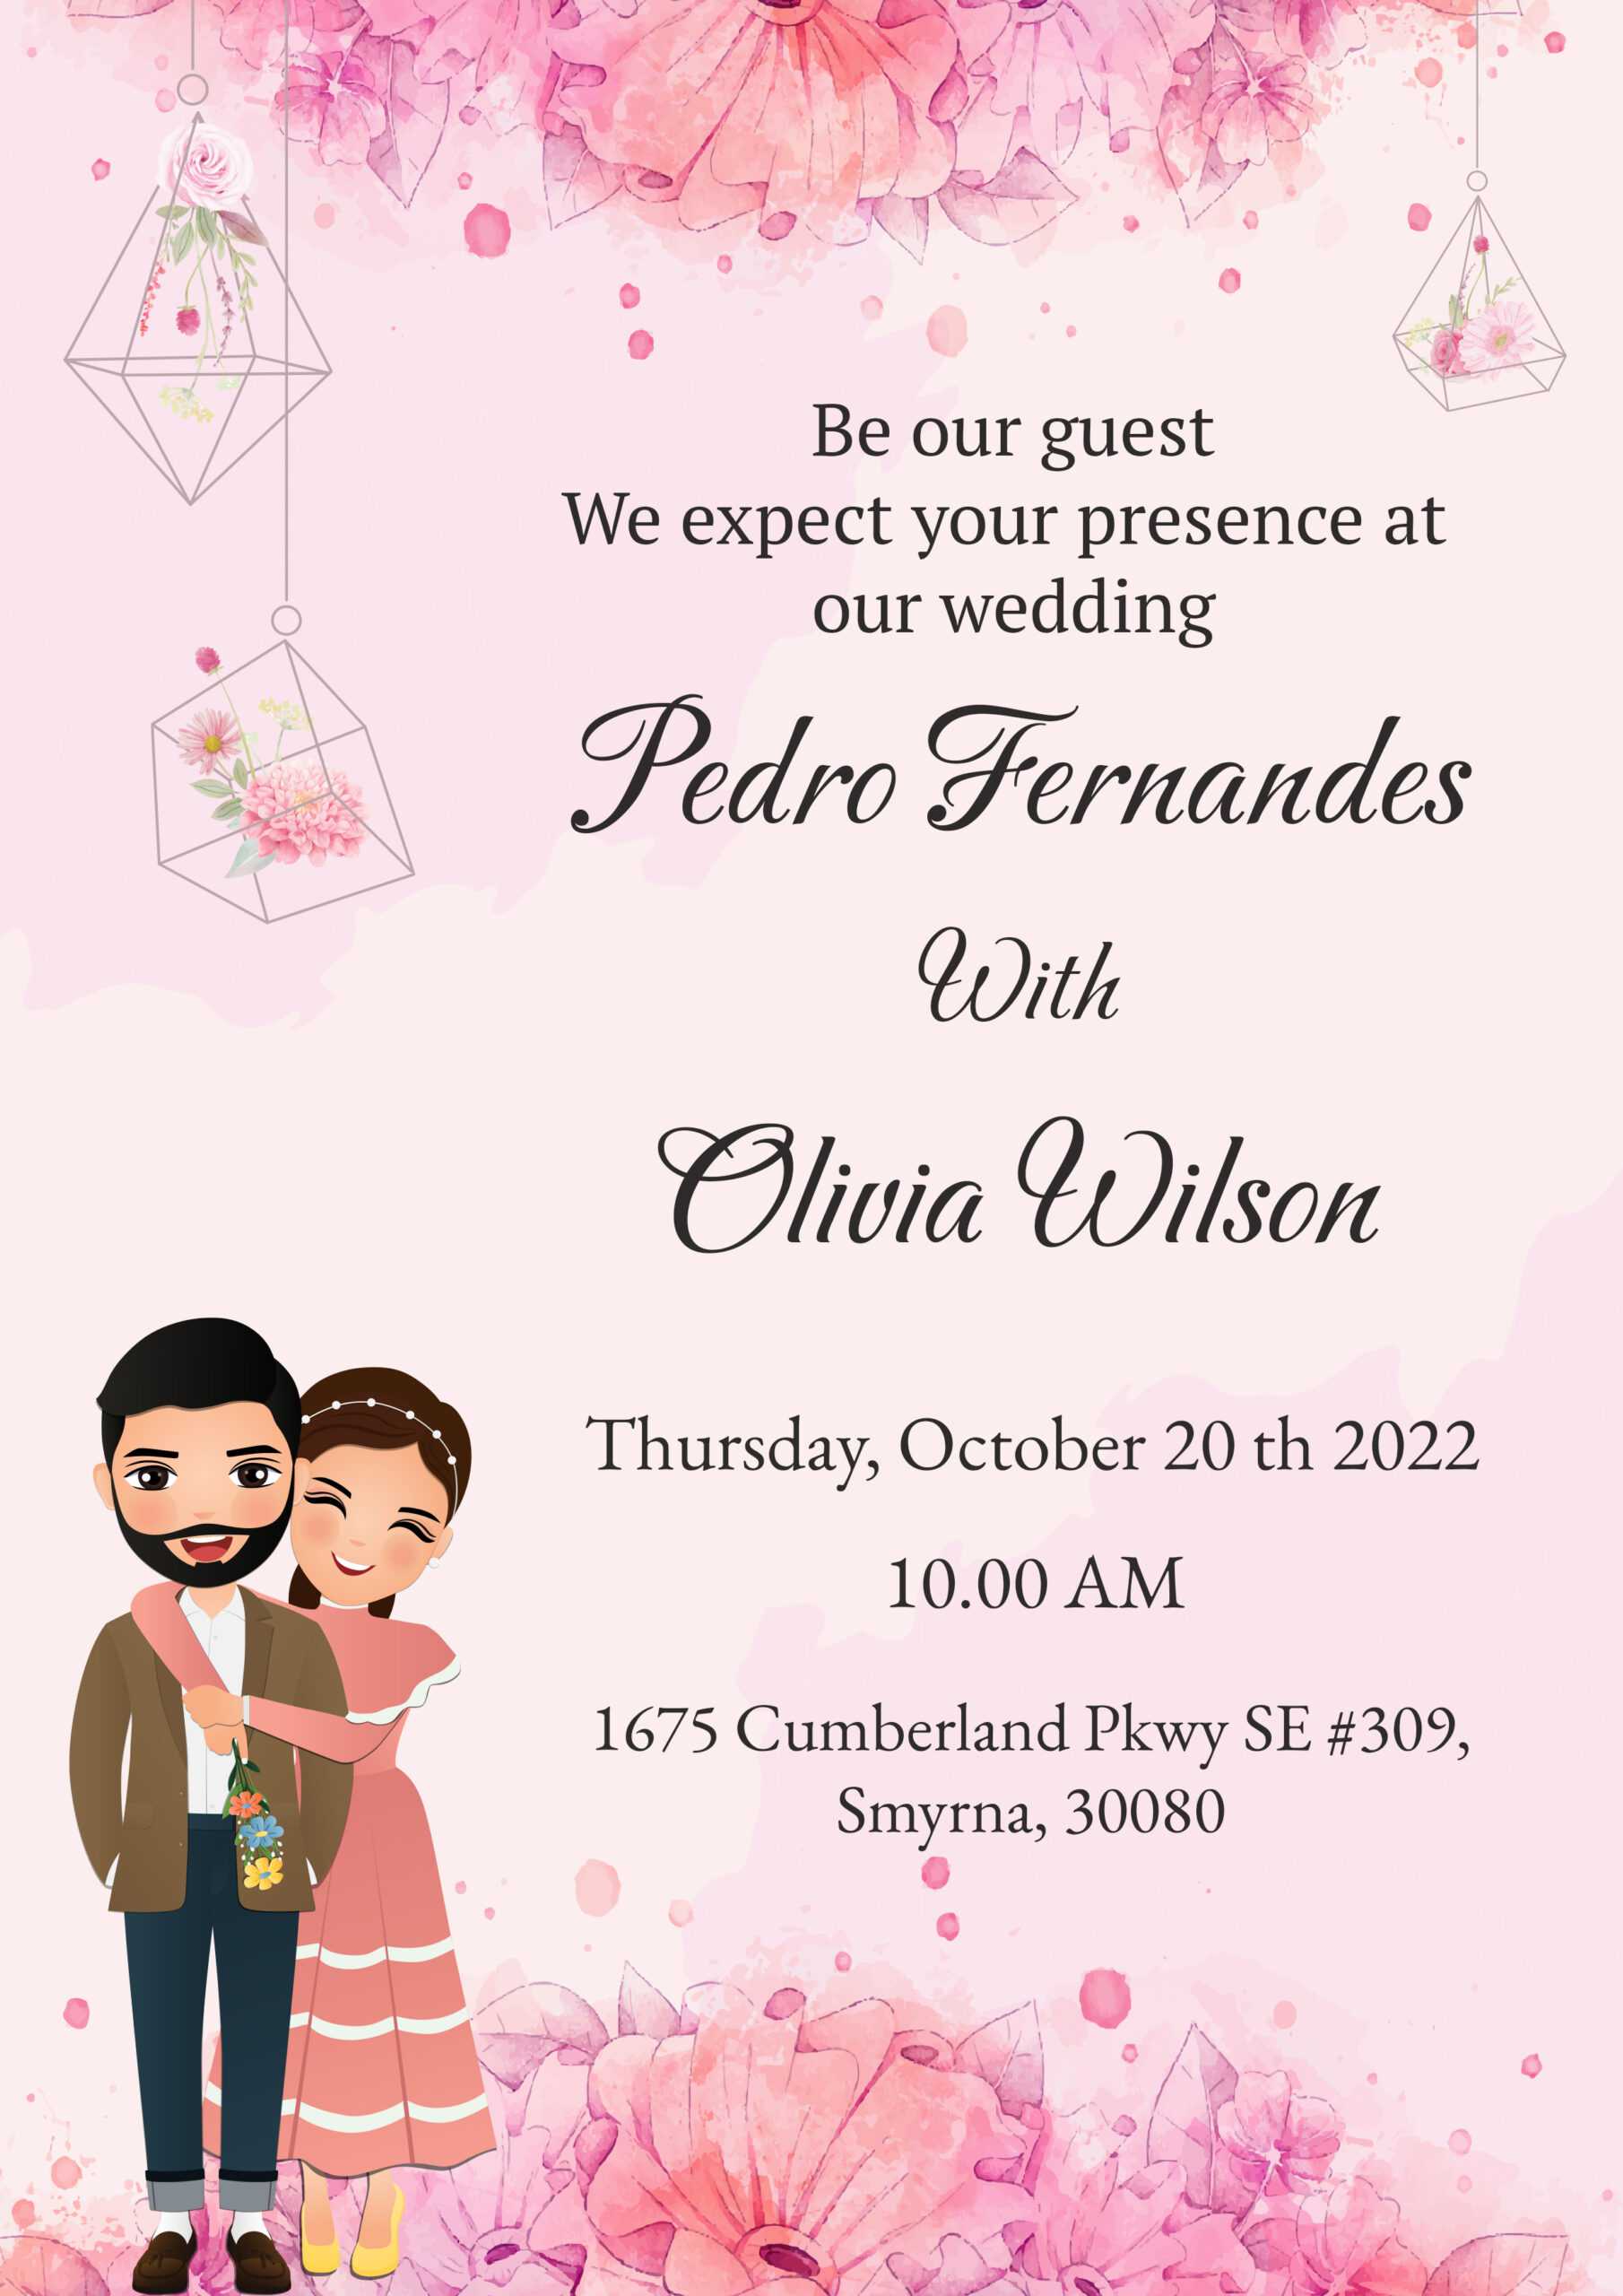 Unique Wedding Invitation Card: Creating Memorable First Impressions ...